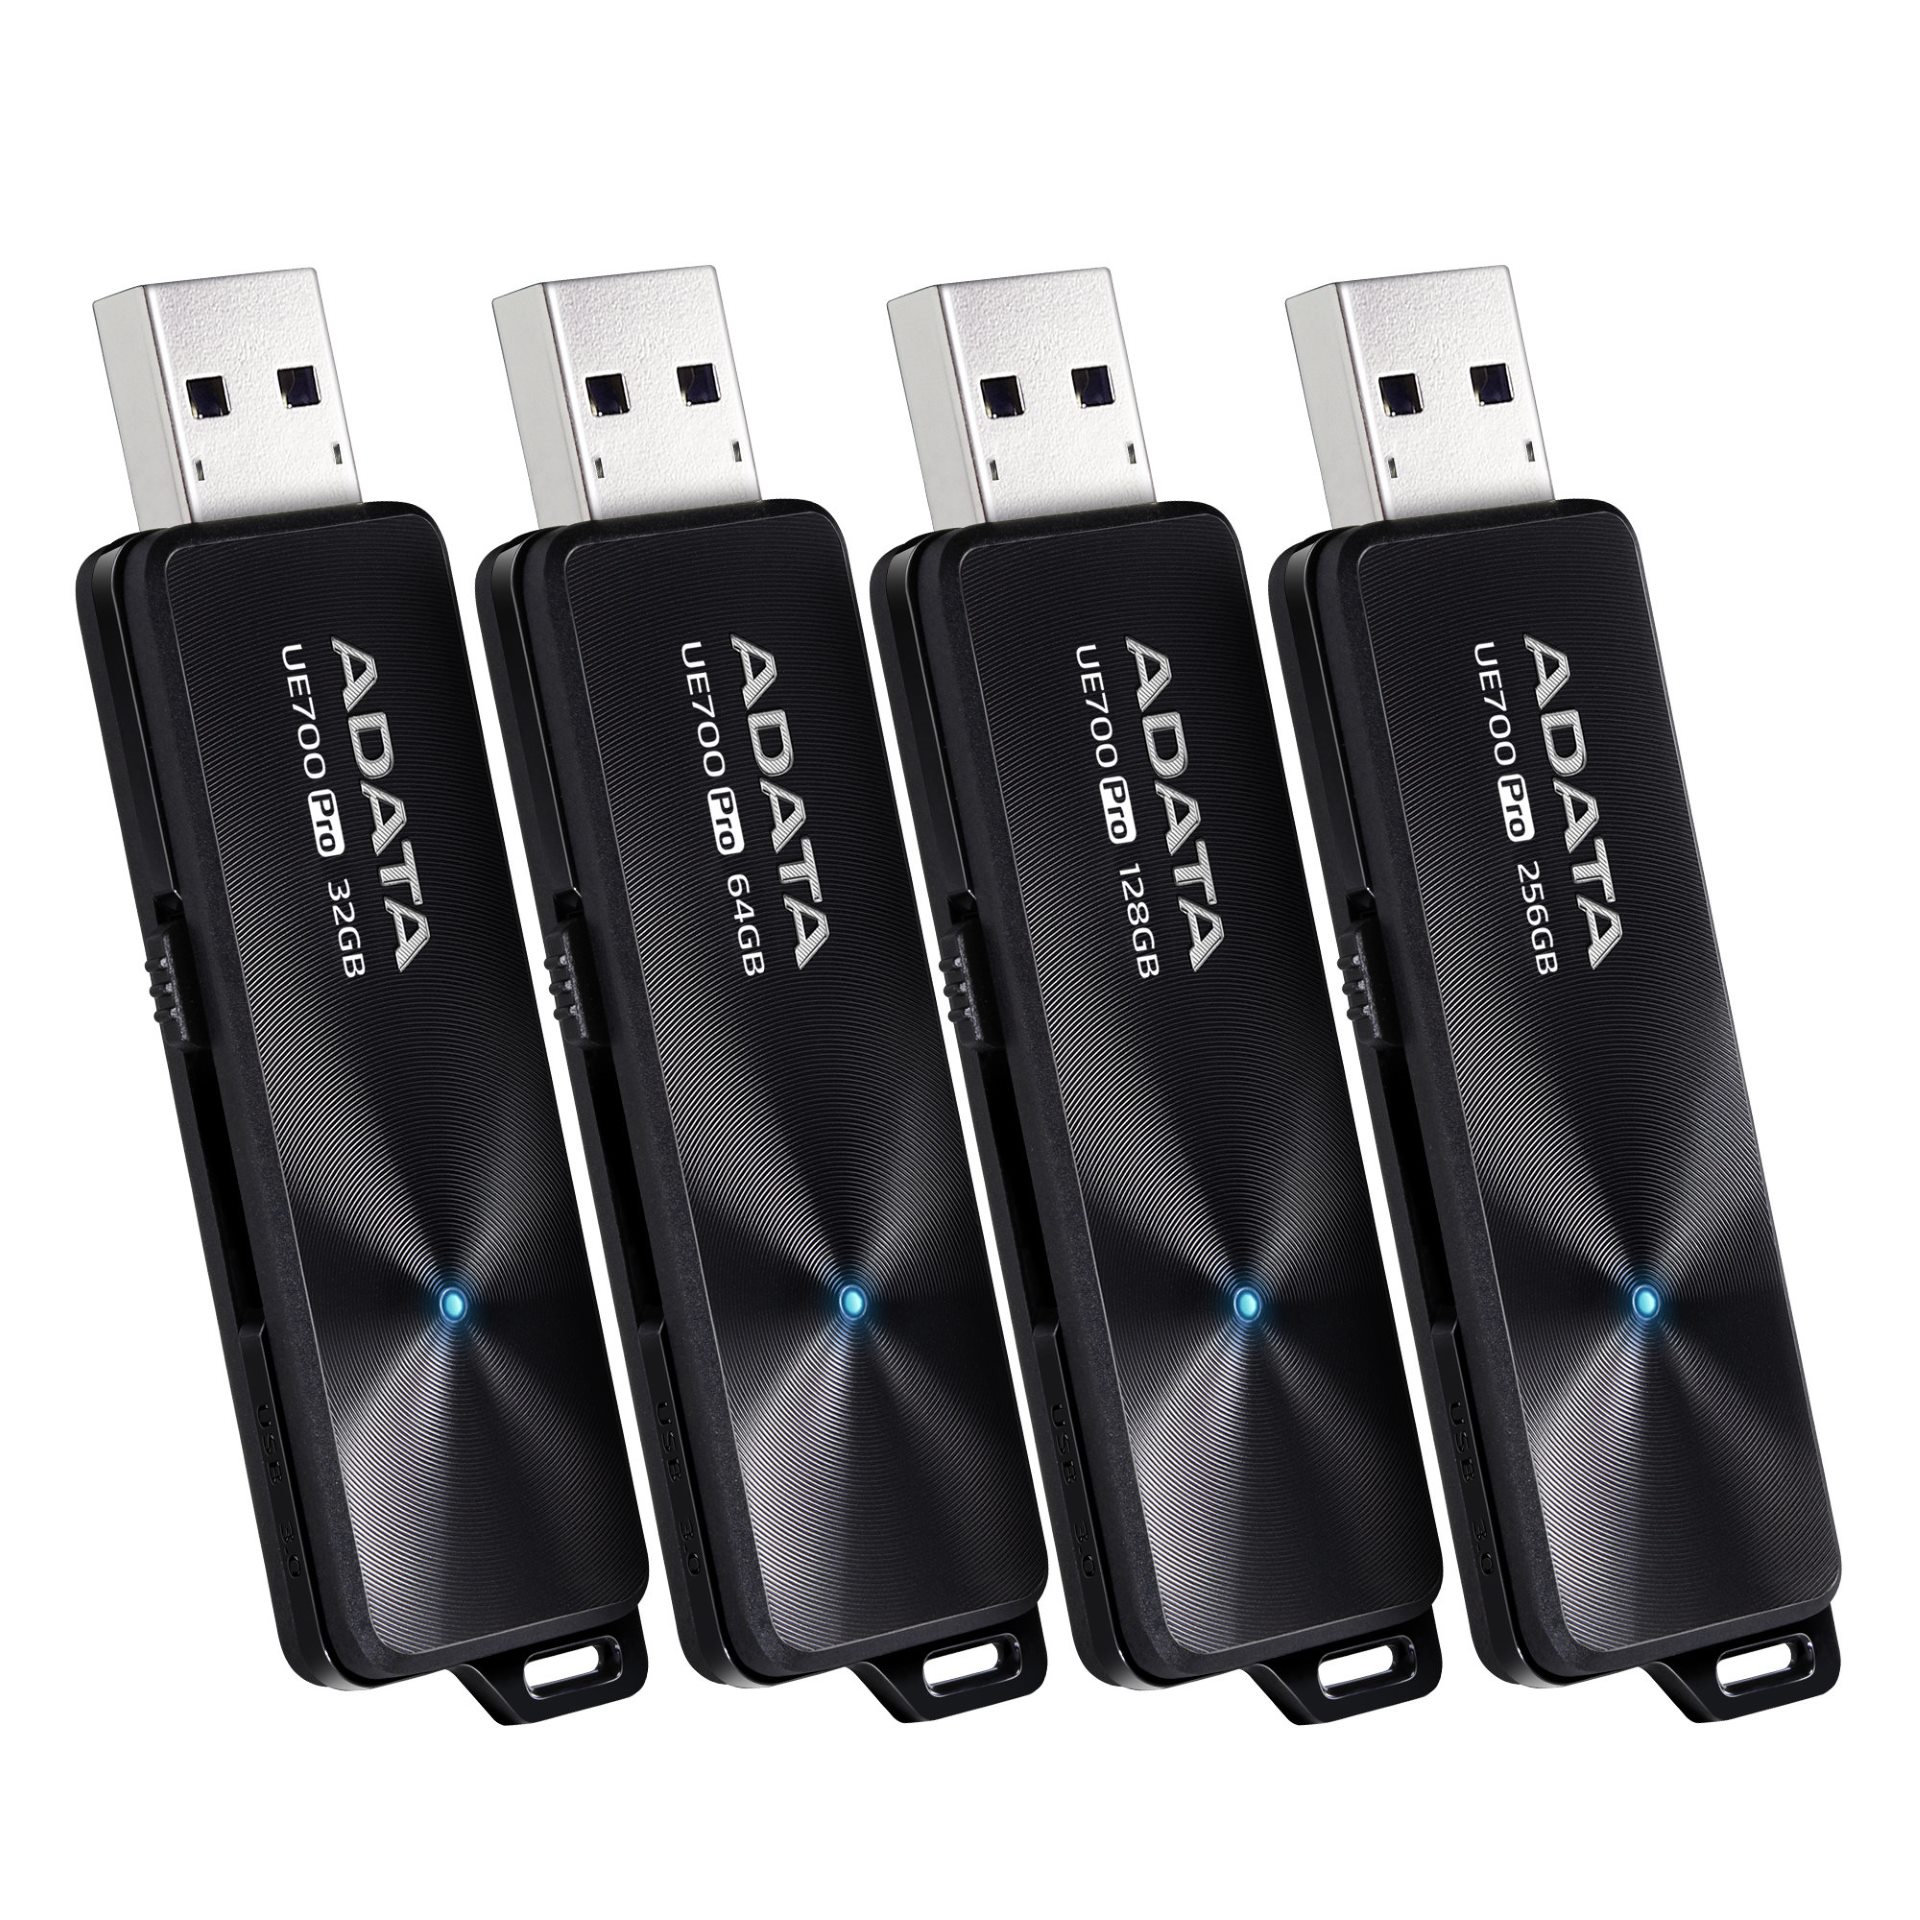 ADATA представила USB флэш-накопитель UE700 Pro